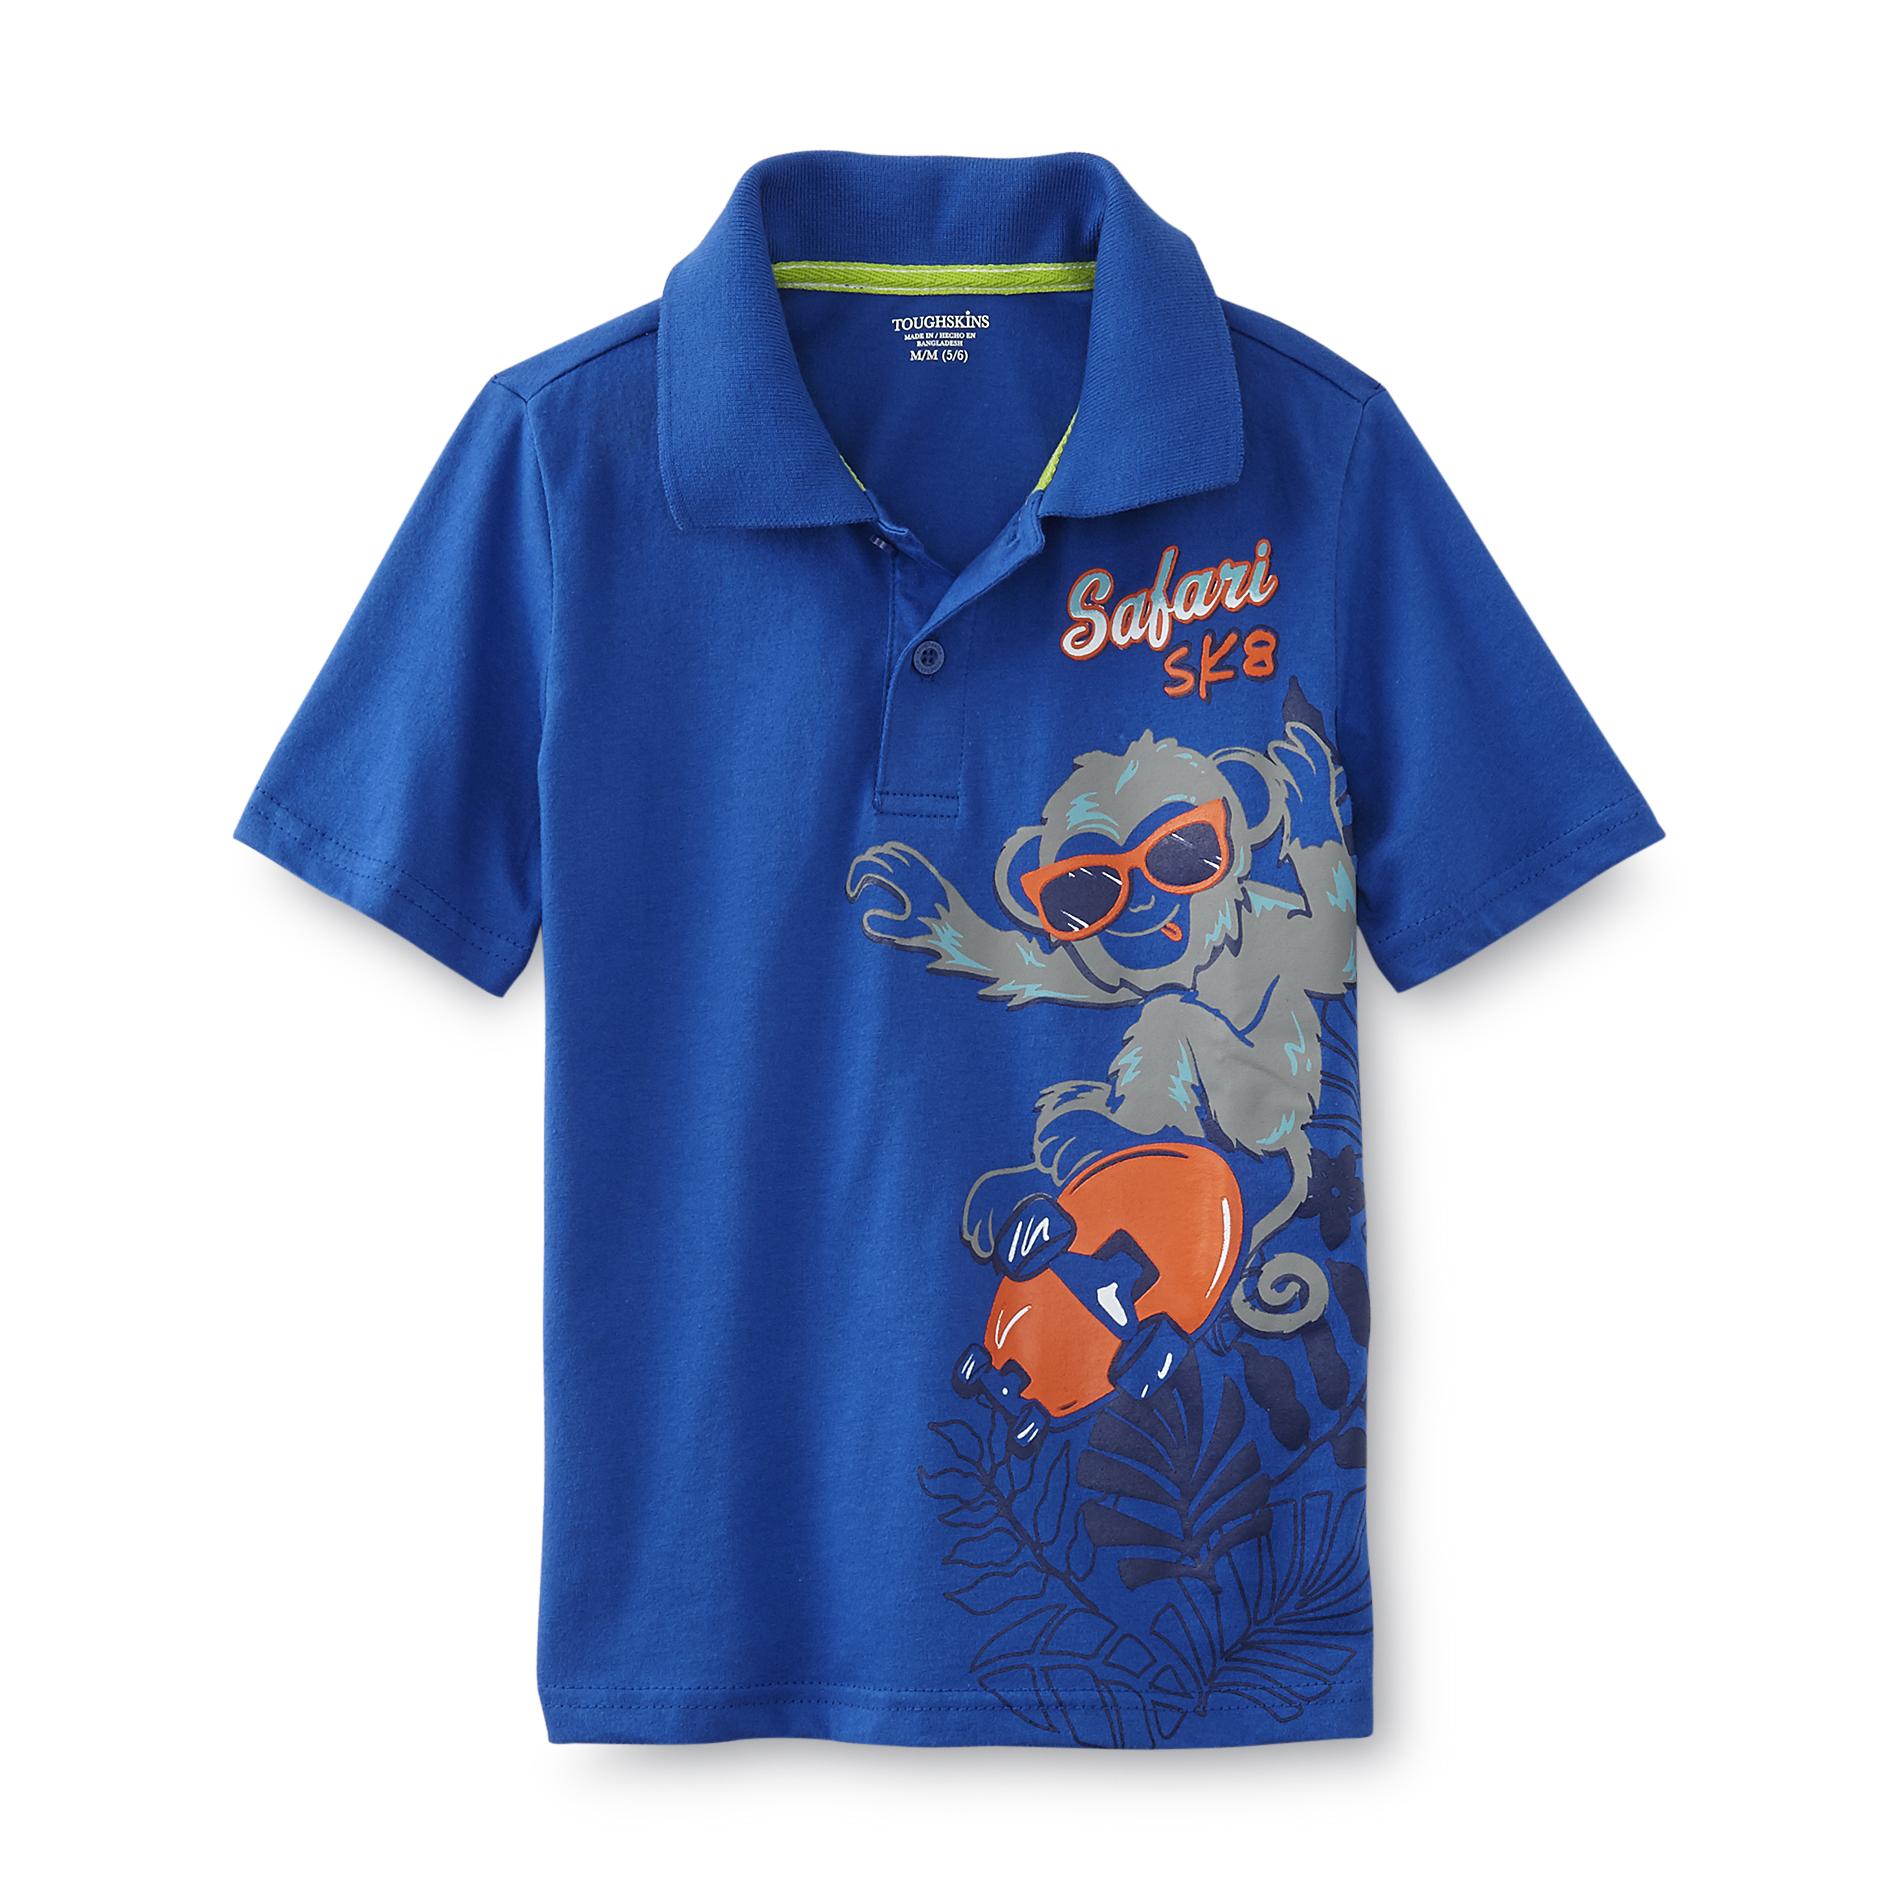 Toughskins Infant & Toddler Boy's Polo Shirt - Safari Sk8